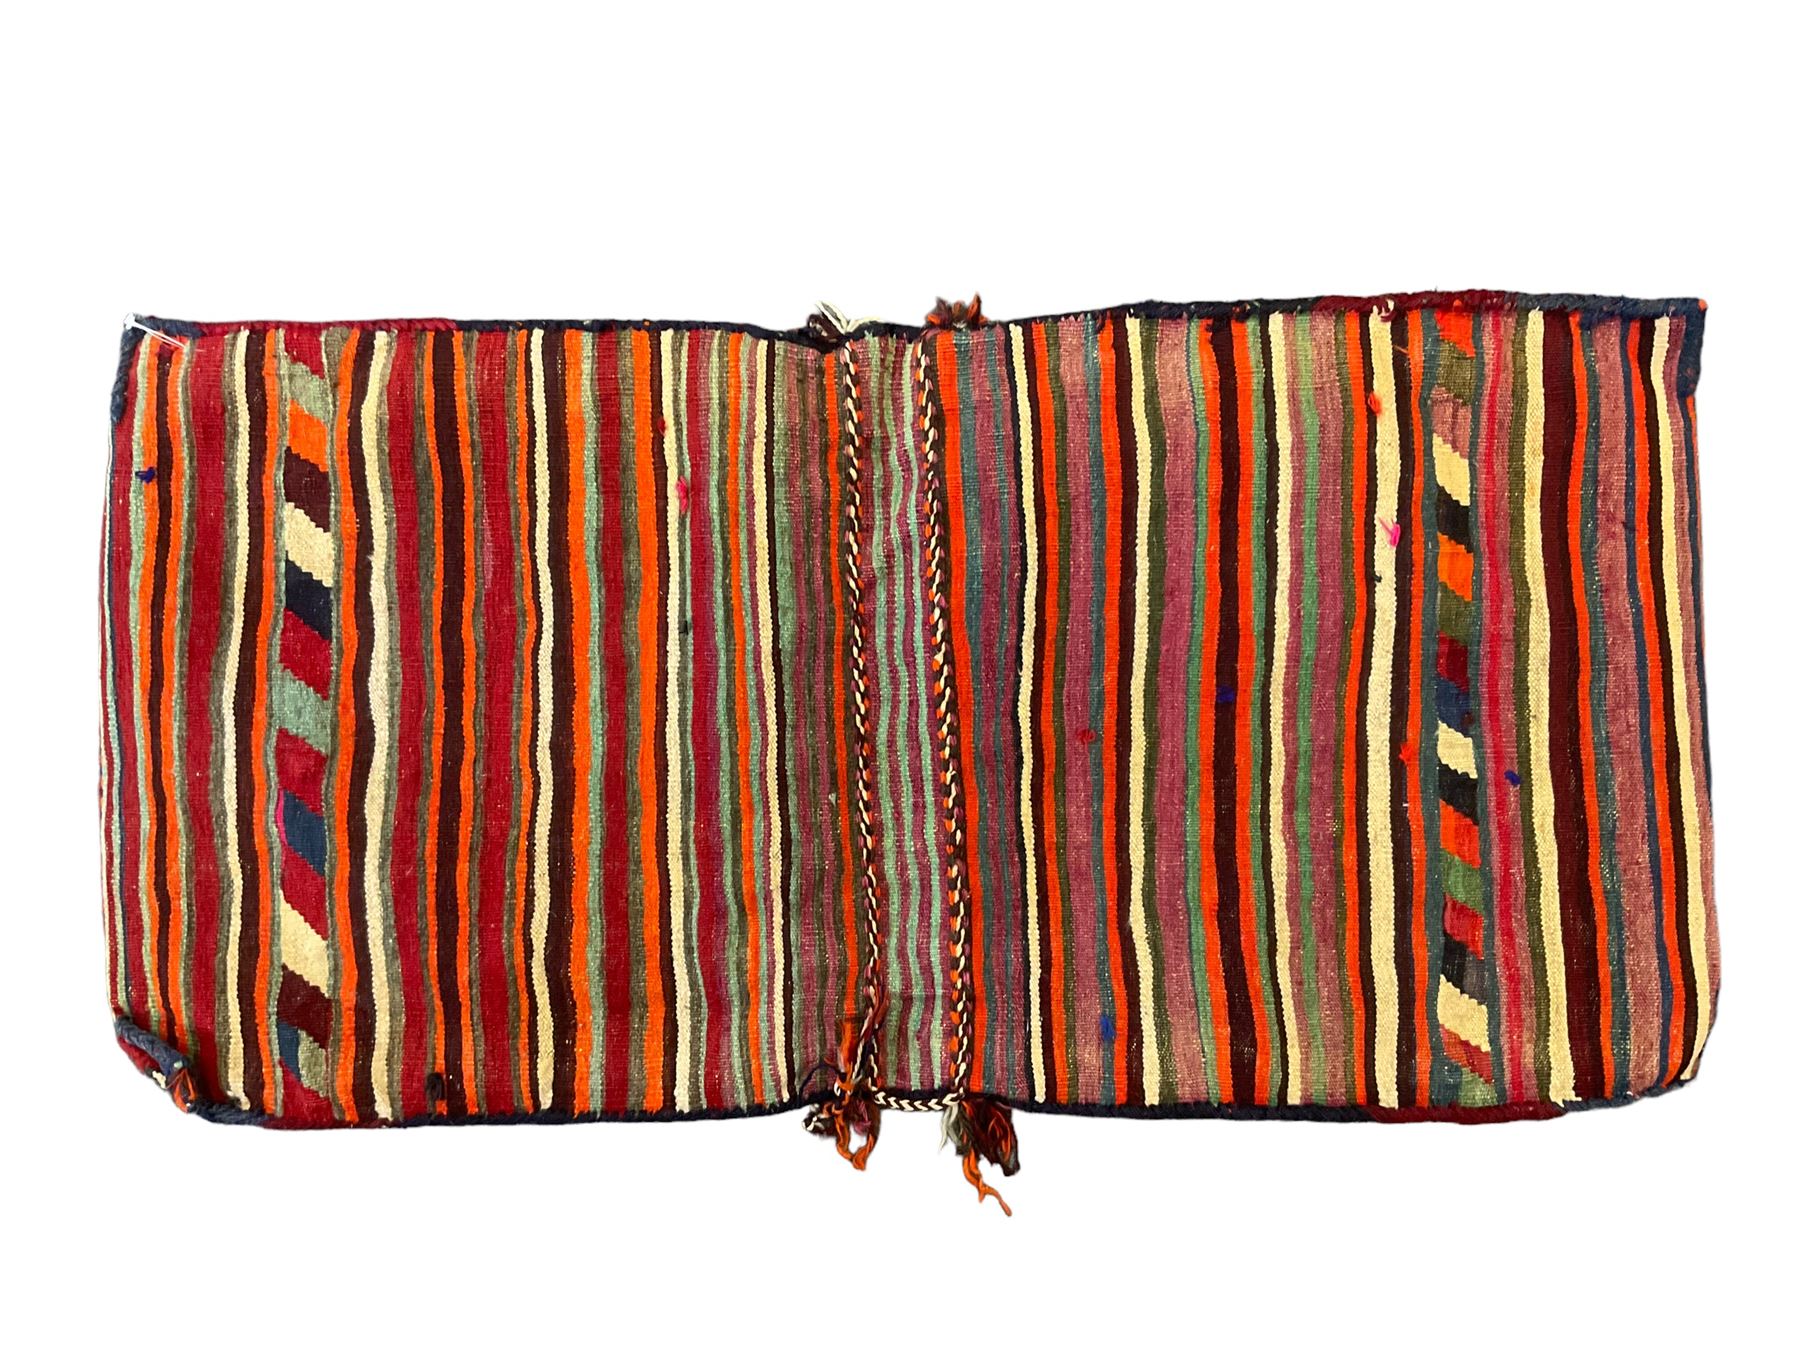 South West Persian Qashgai saddle bag - Image 2 of 4